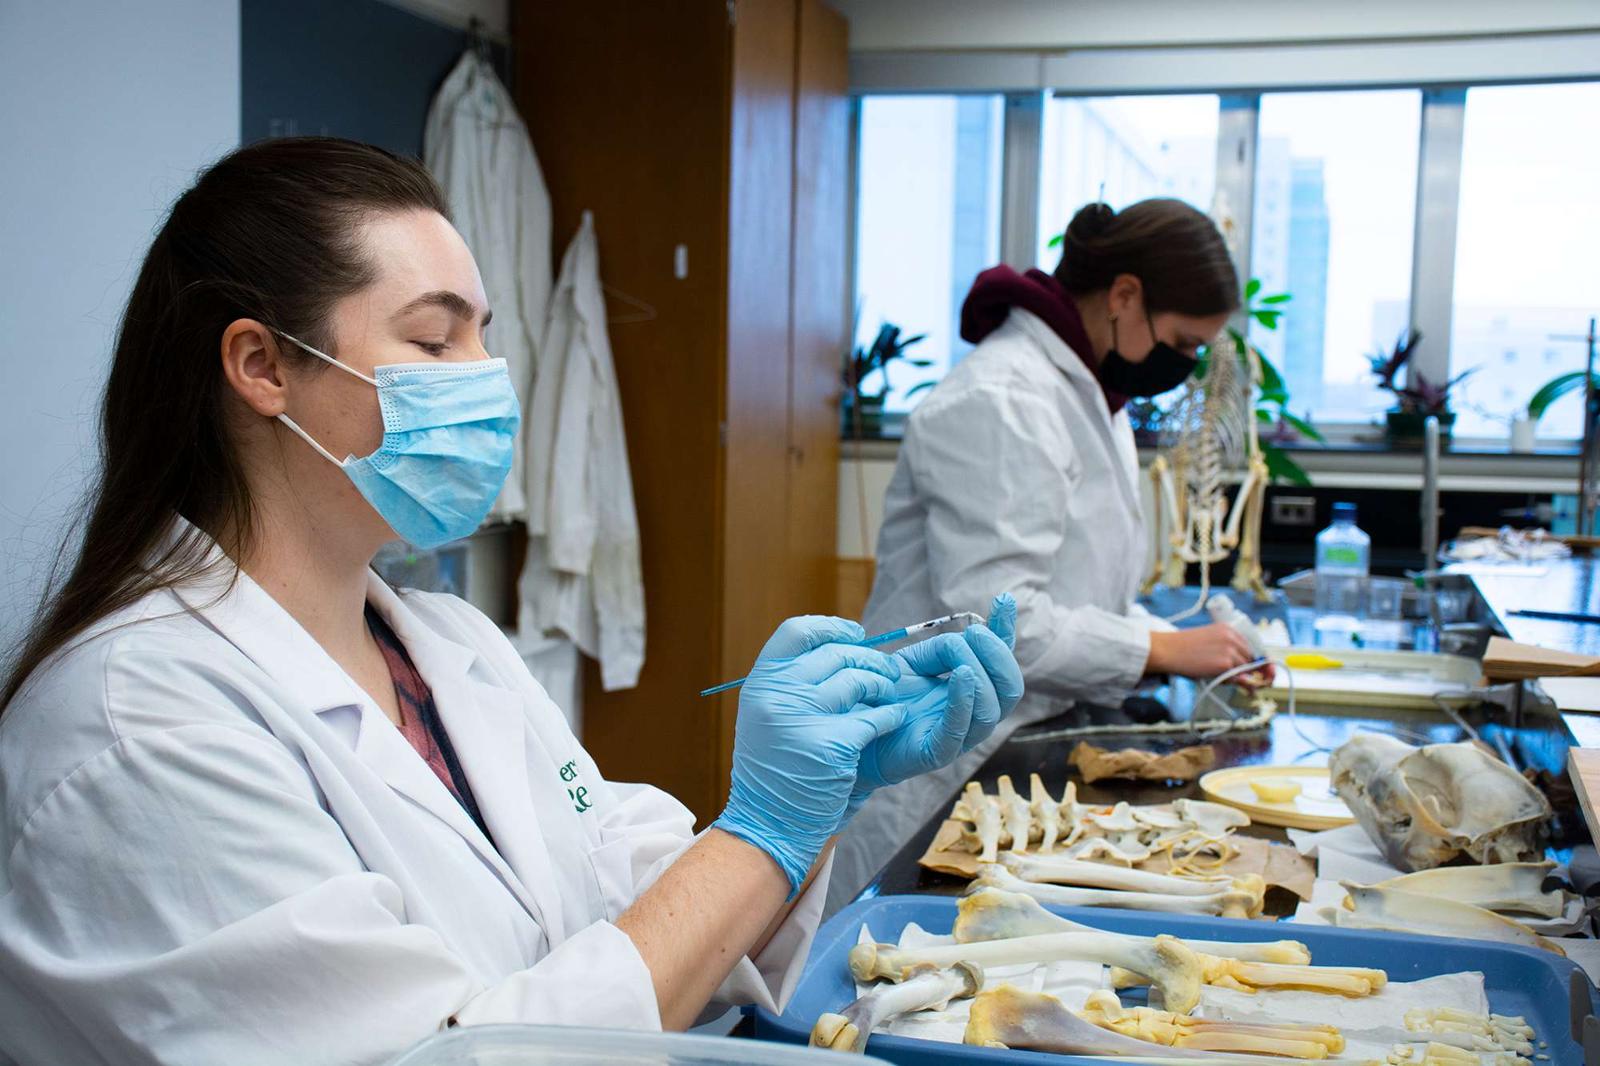 Two students in science attire examining bones